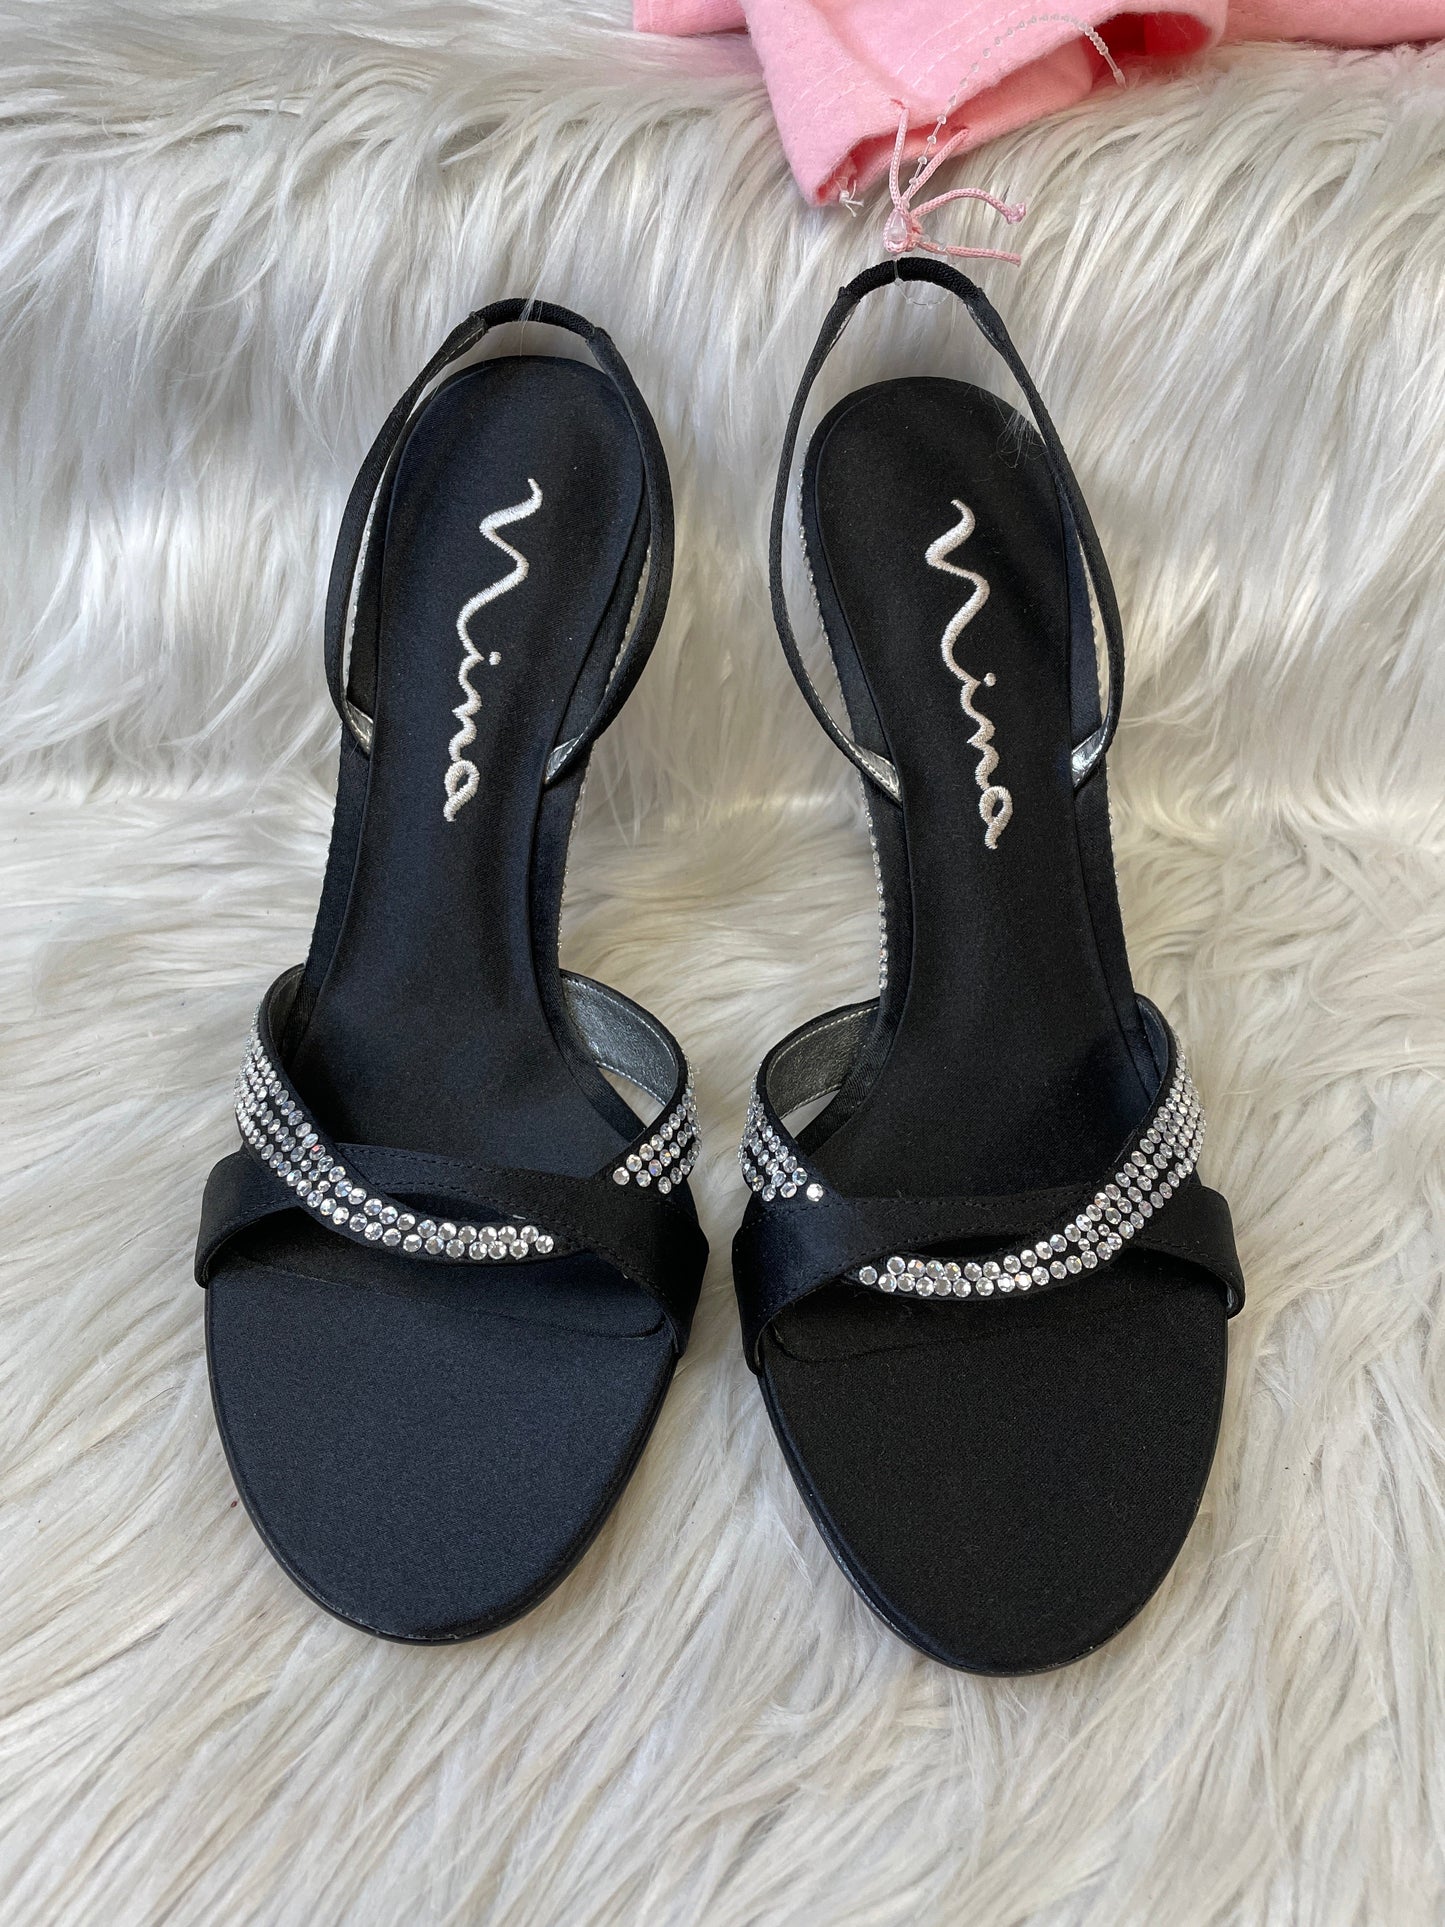 Sandals Heels Stiletto By Nina  Size: 10